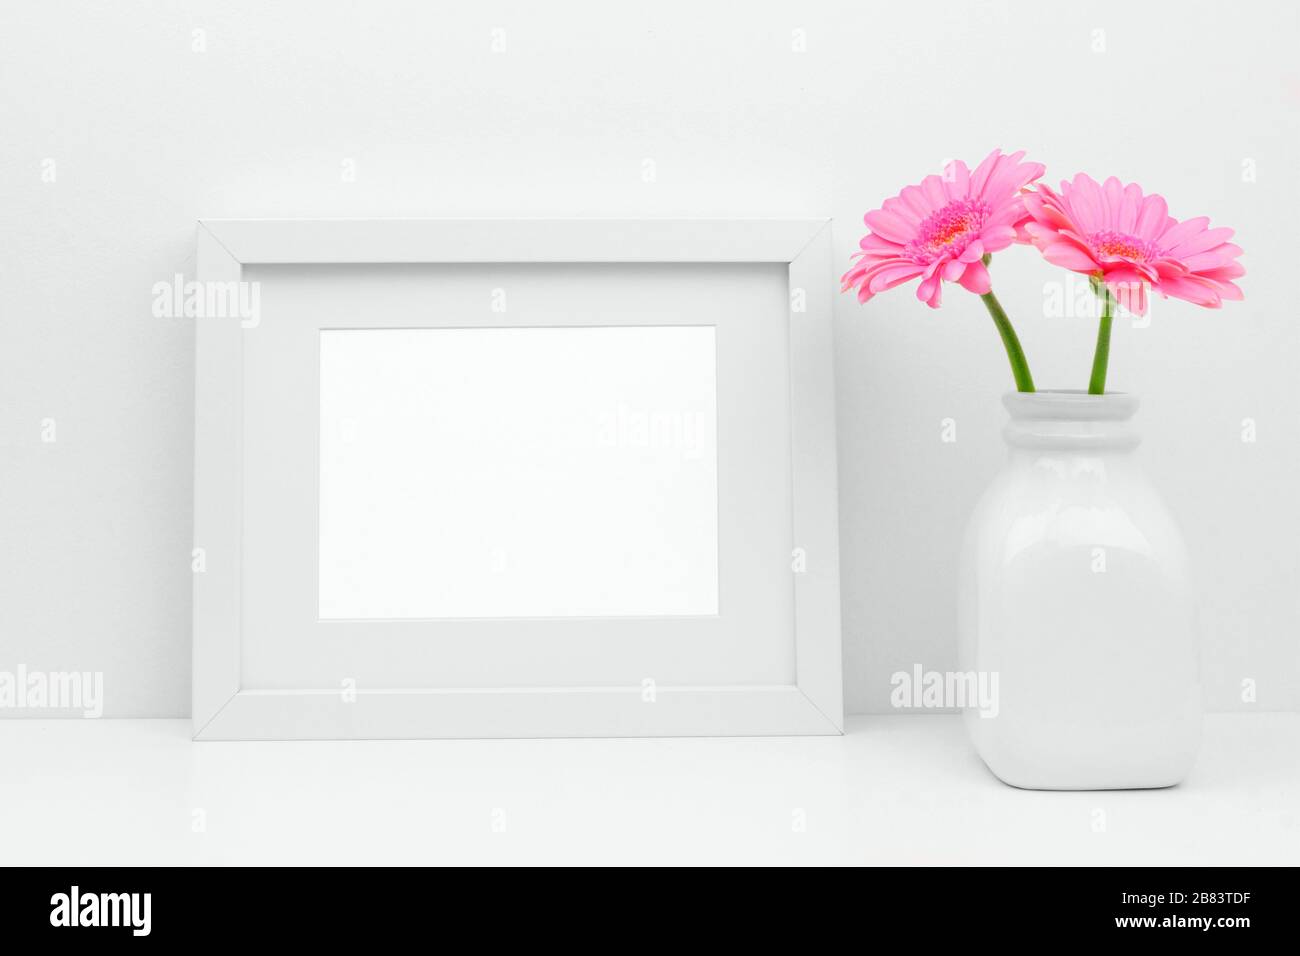 Mock up white frame and pink daisy flowers in vase on a shelf or desk. White color scheme. Landscape frame orientation. Stock Photo